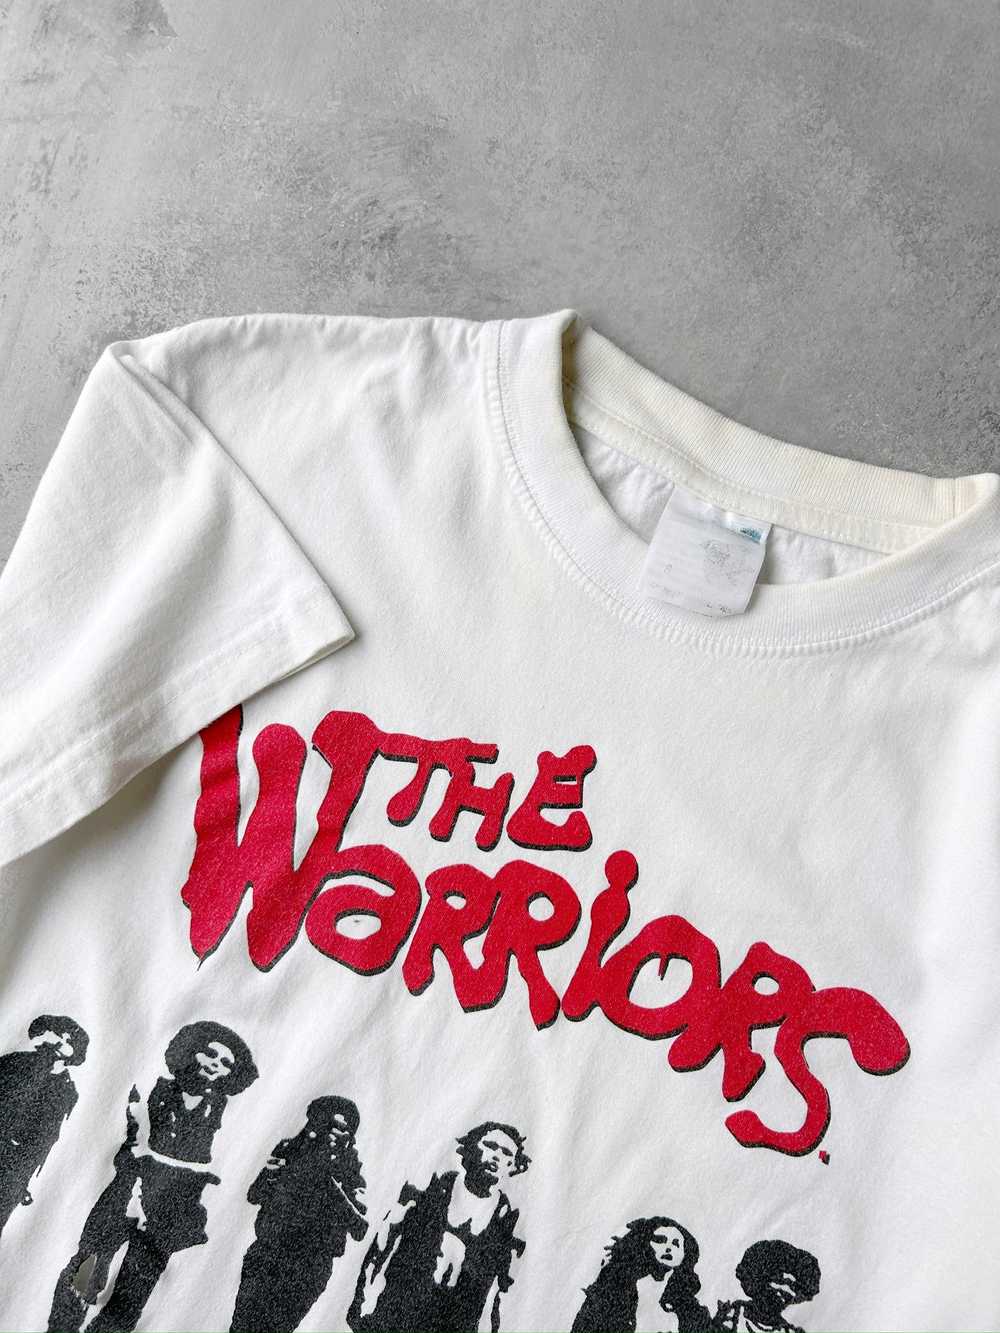 The Warriors T-Shirt 00's - Small / Medium - image 2